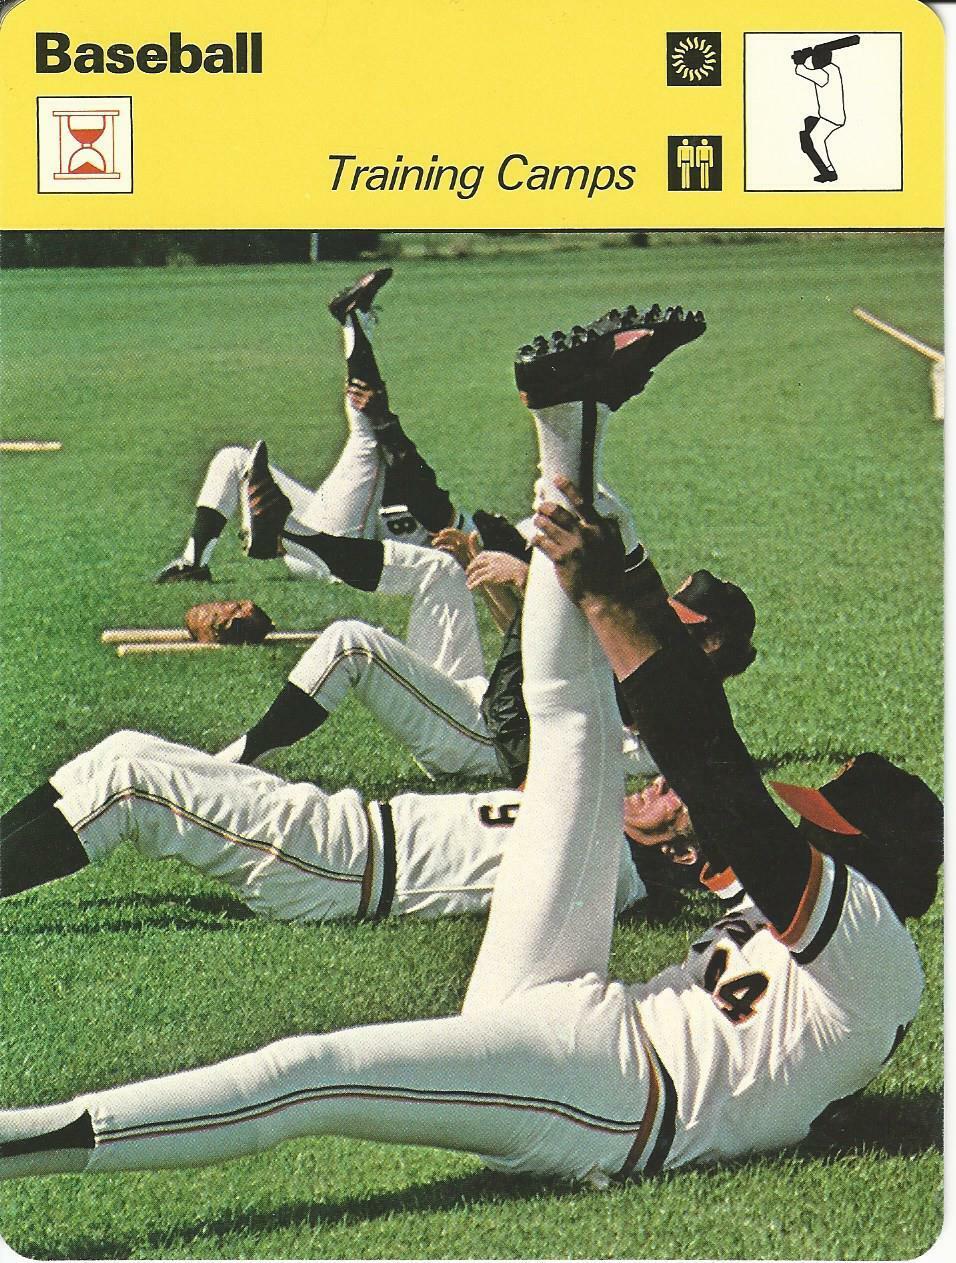 1977-79 Sportscaster Card, #76.19 Baseball, Training Camps